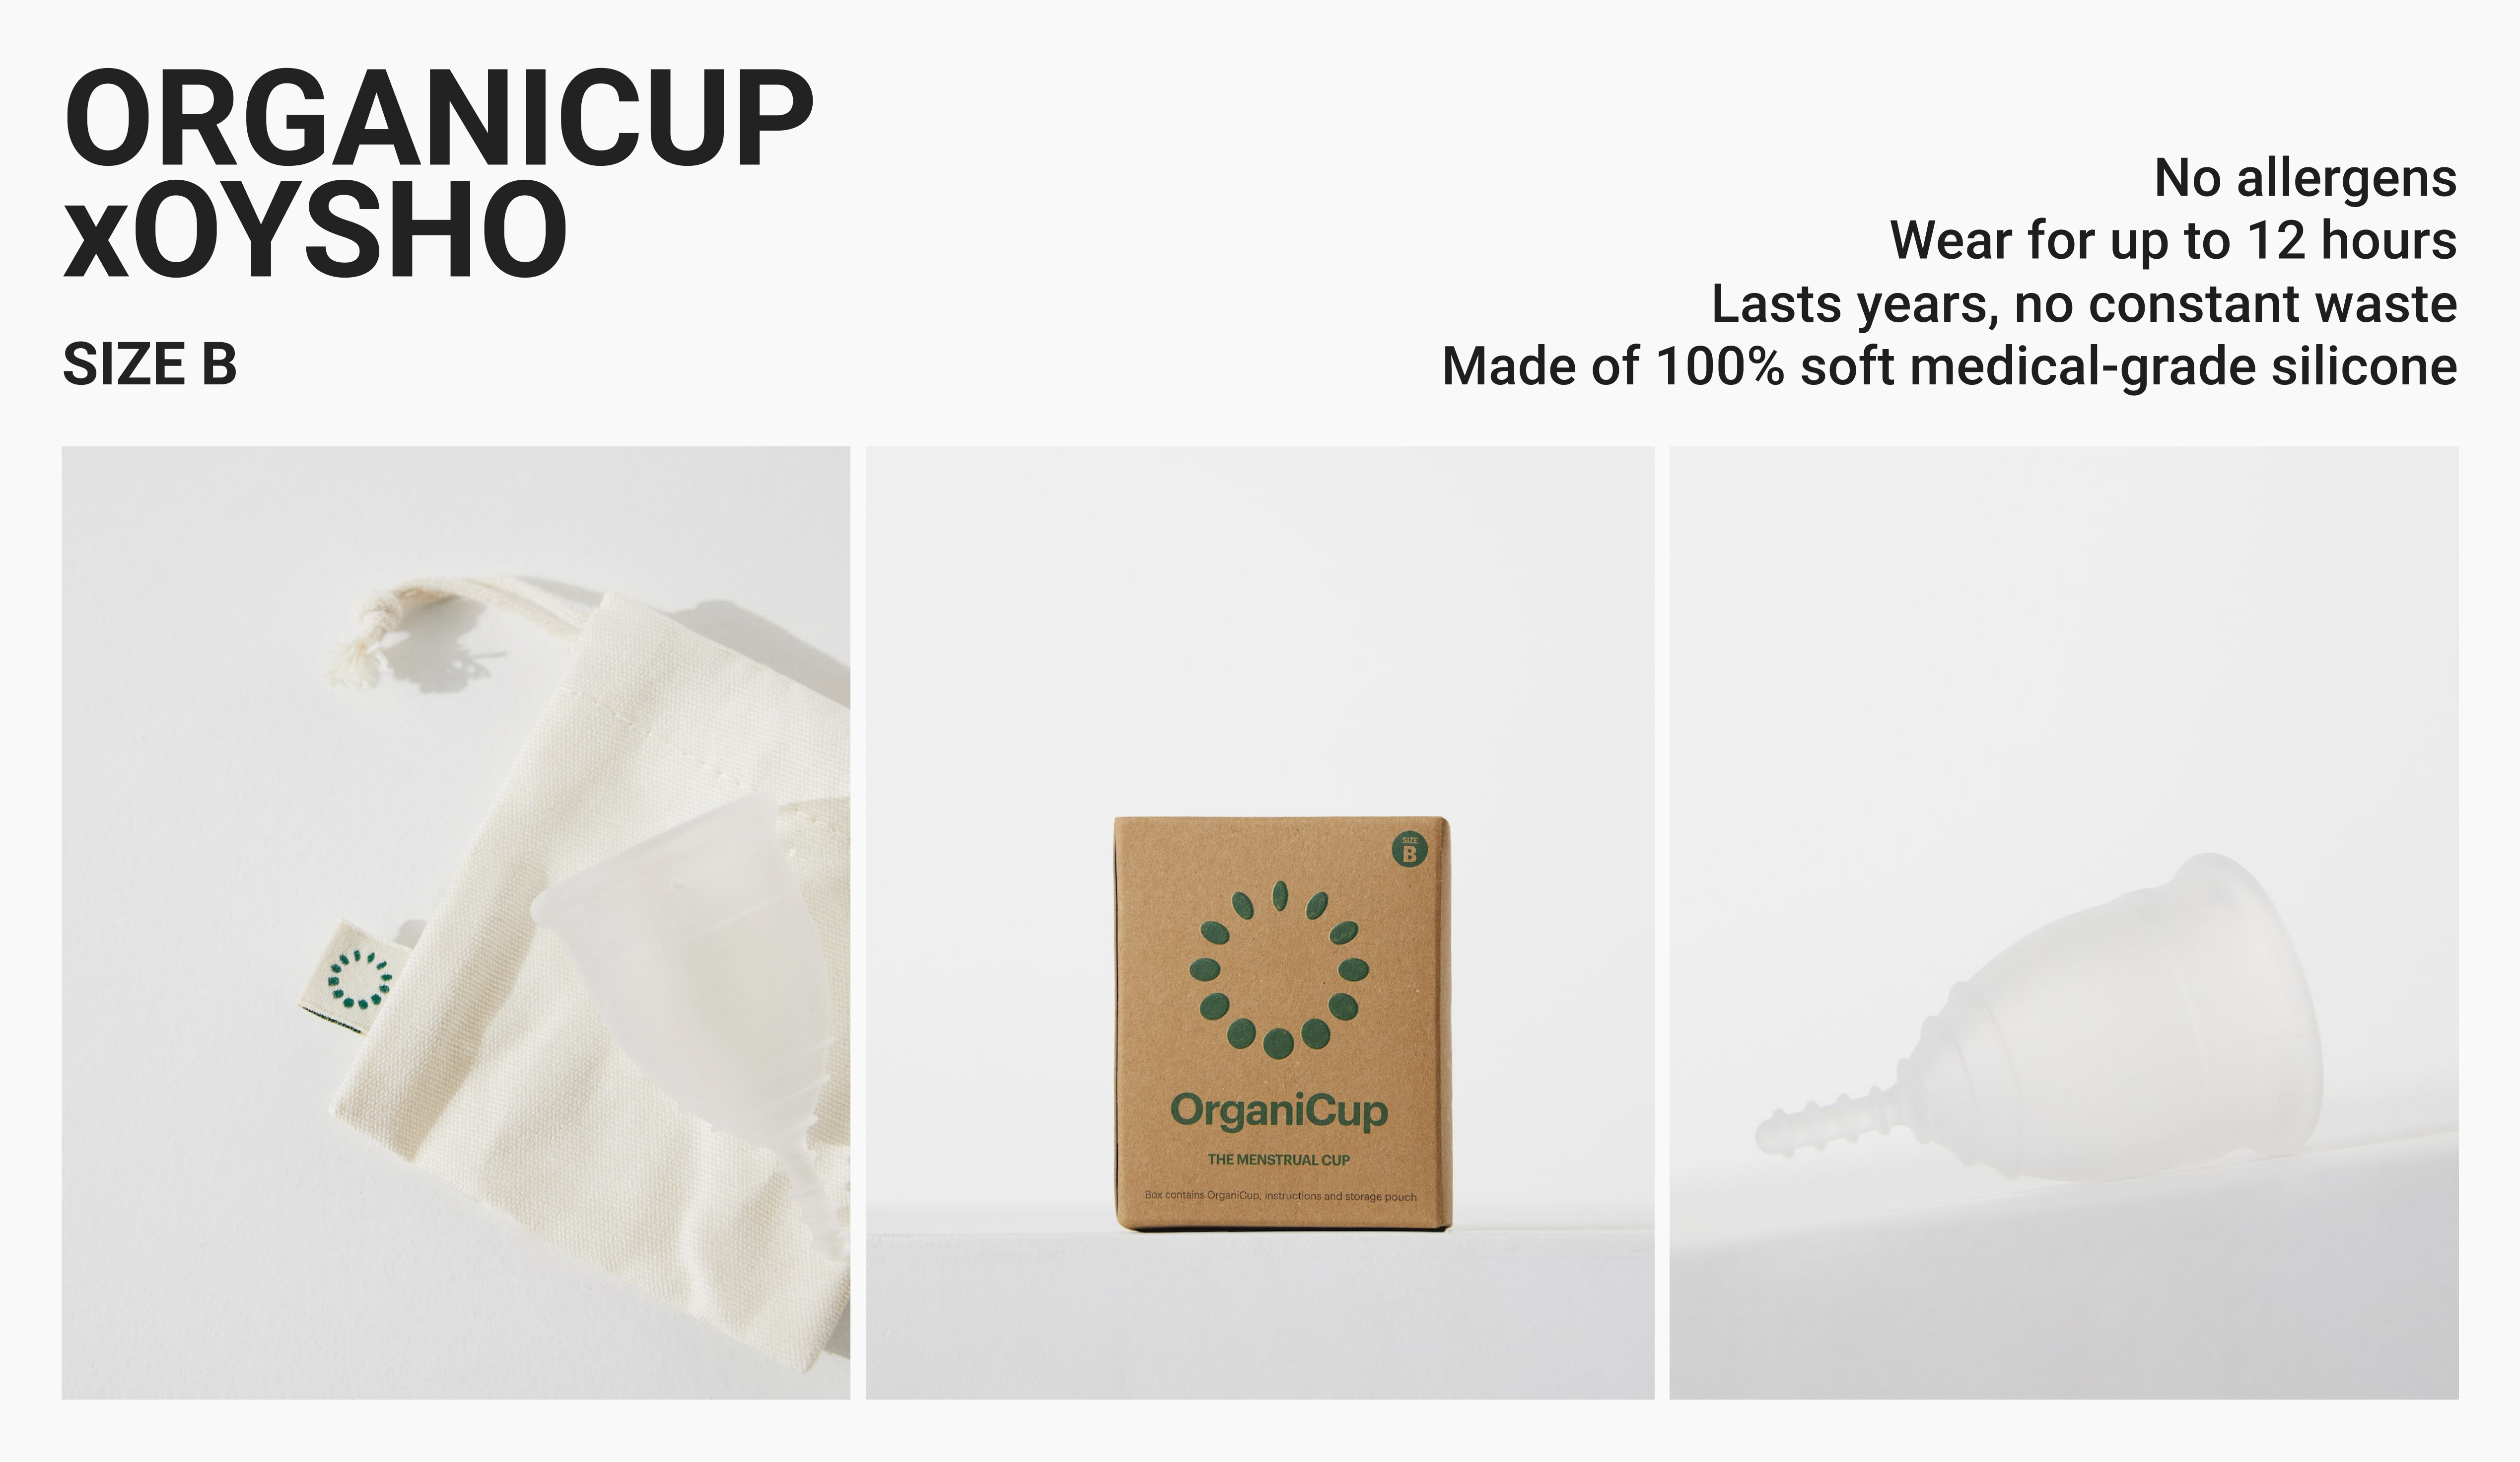 Organicup size B menstrual cup